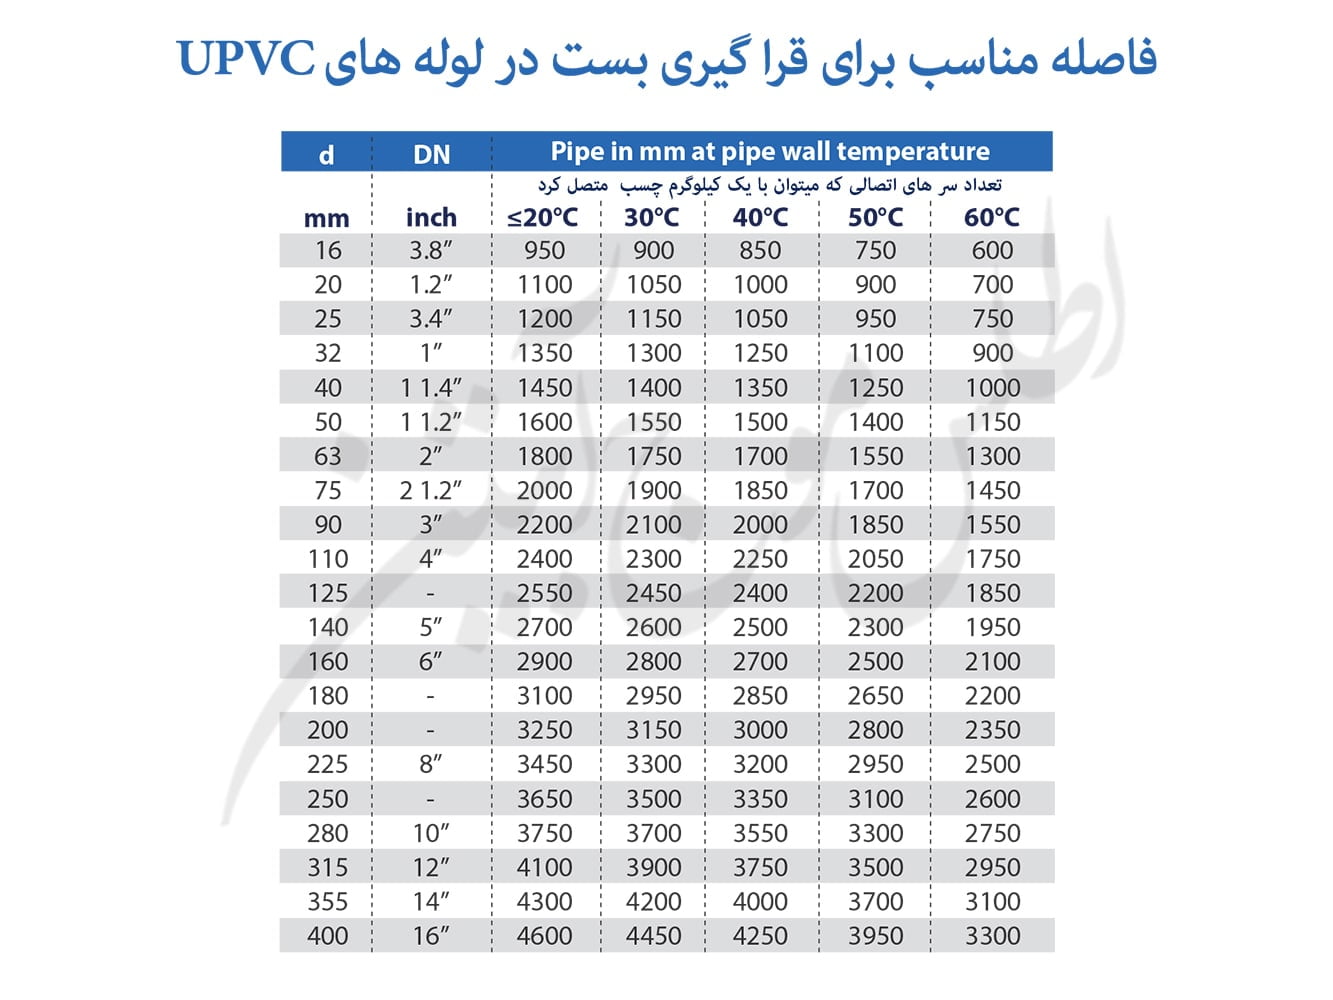 جدول راهنمای فواصل بست لوله UPVC